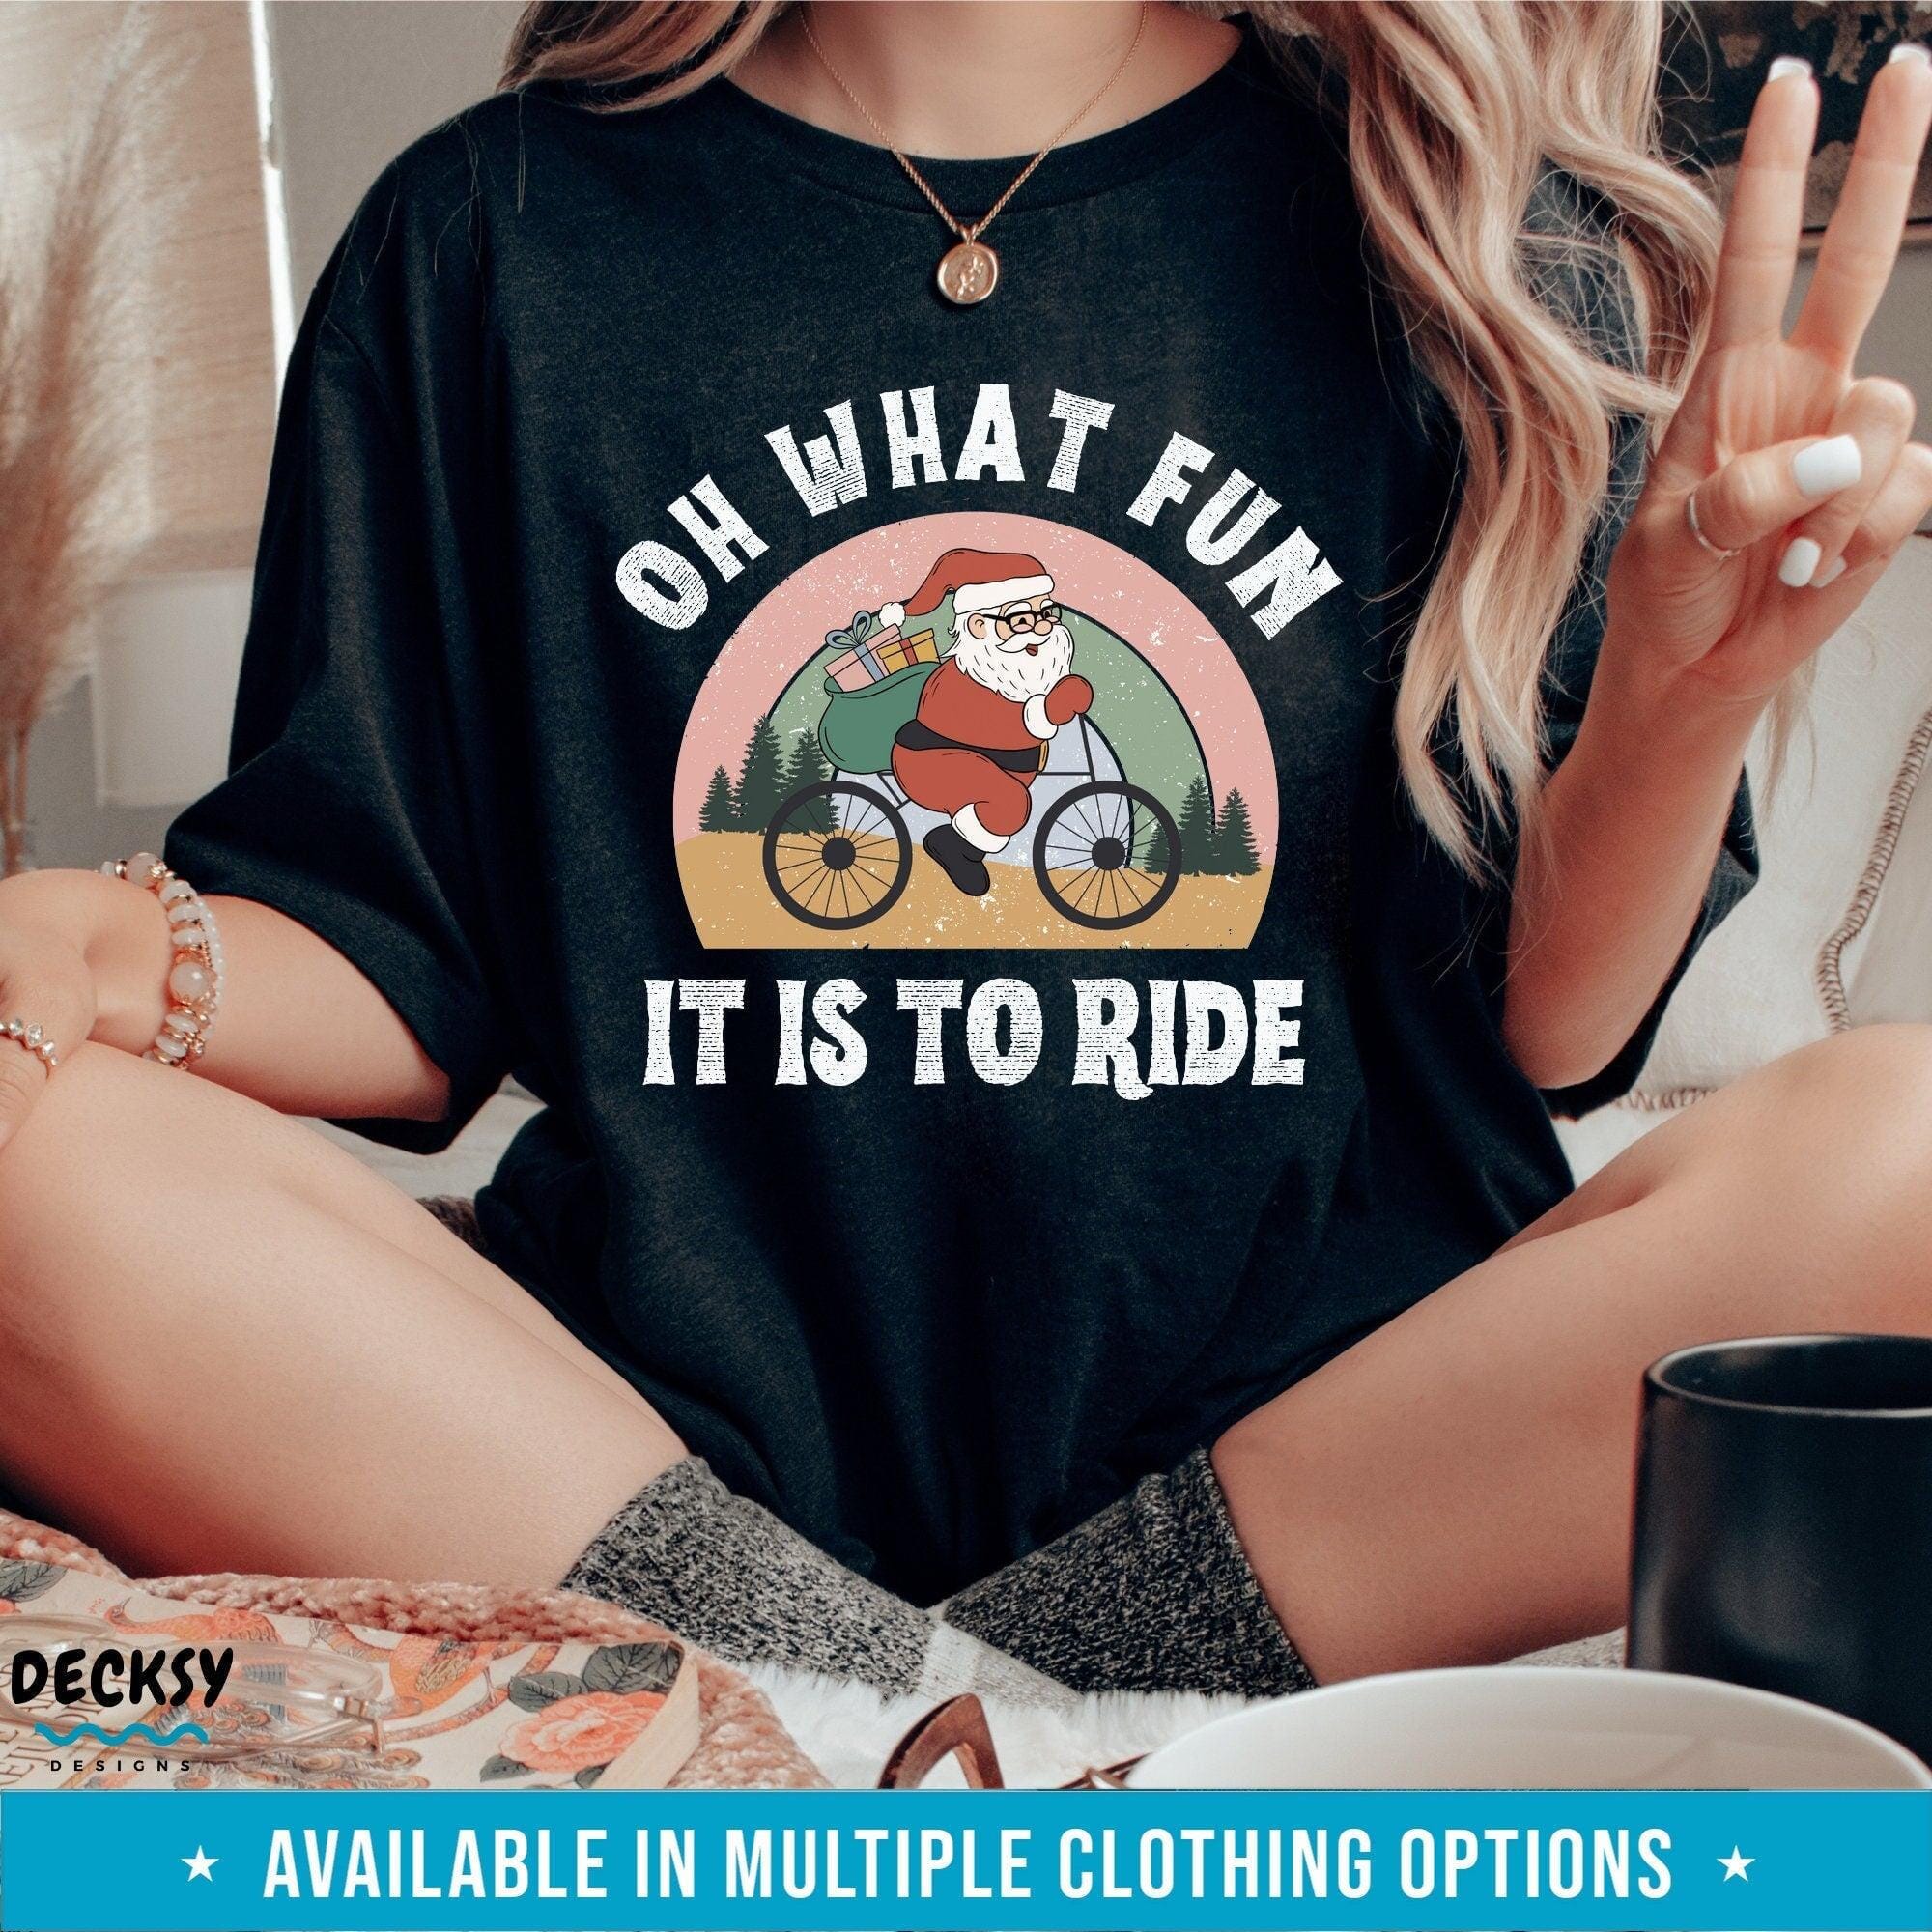 Santa Bicycle Tshirt, Biker Christmas Gift-Clothing:Gender-Neutral Adult Clothing:Tops & Tees:T-shirts:Graphic Tees-DecksyDesigns